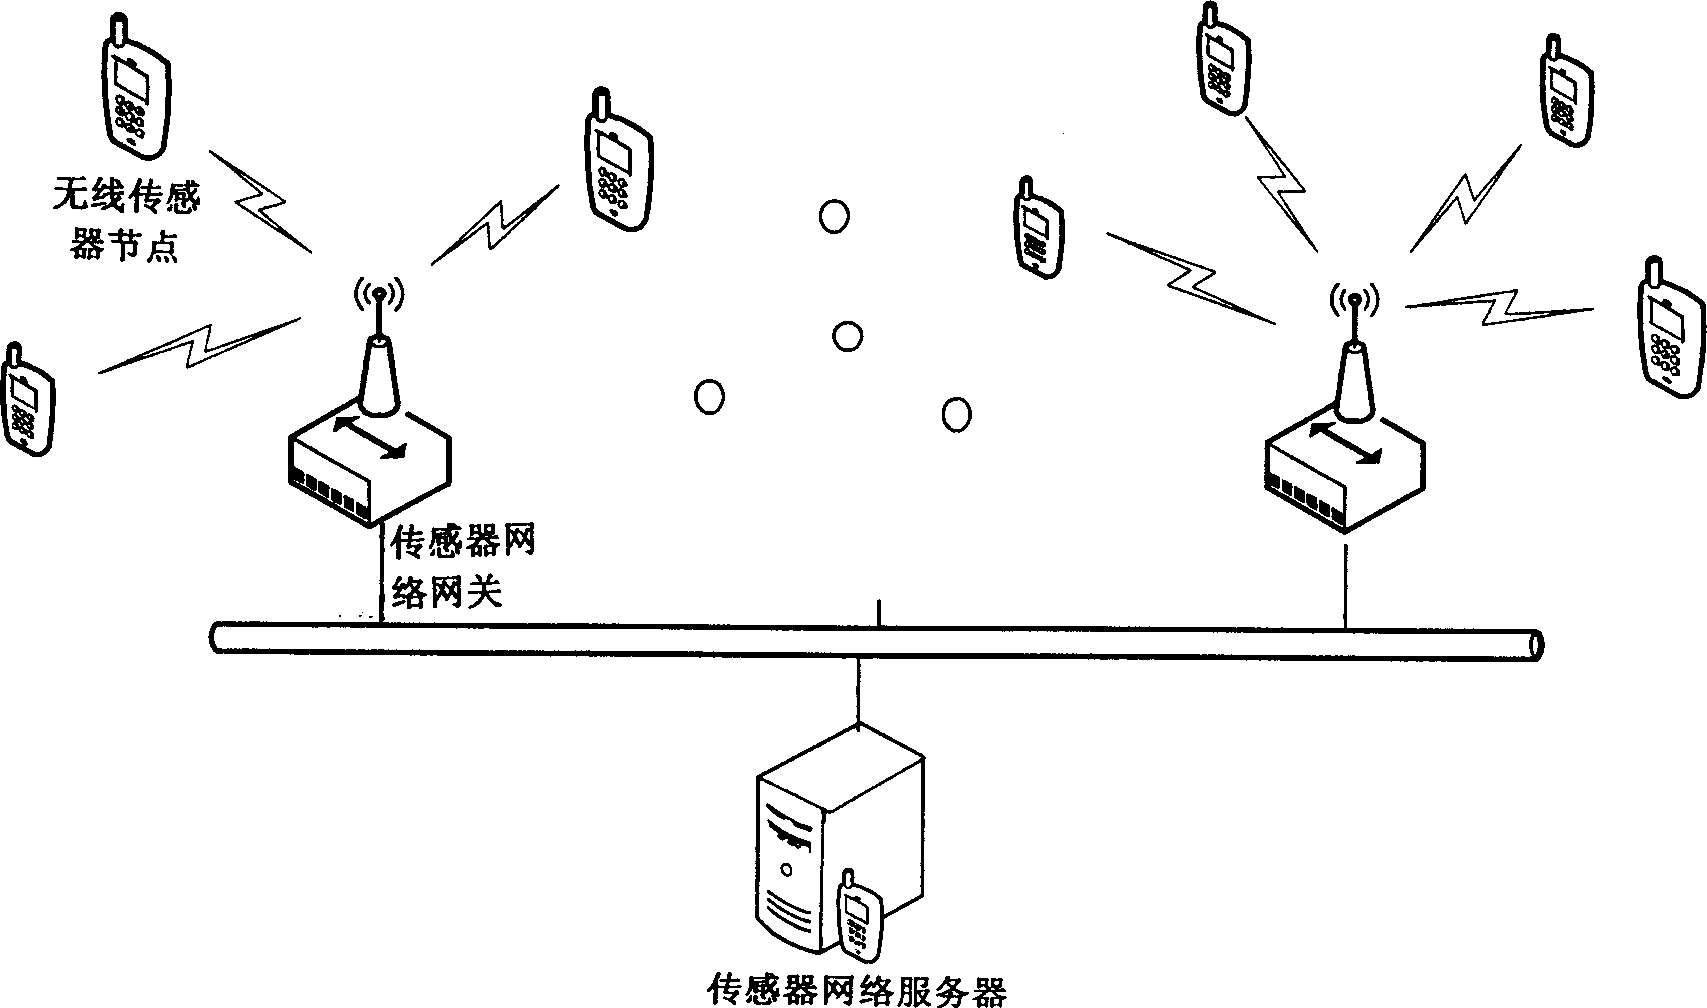 Communication method between wireless sensor network node and gateway